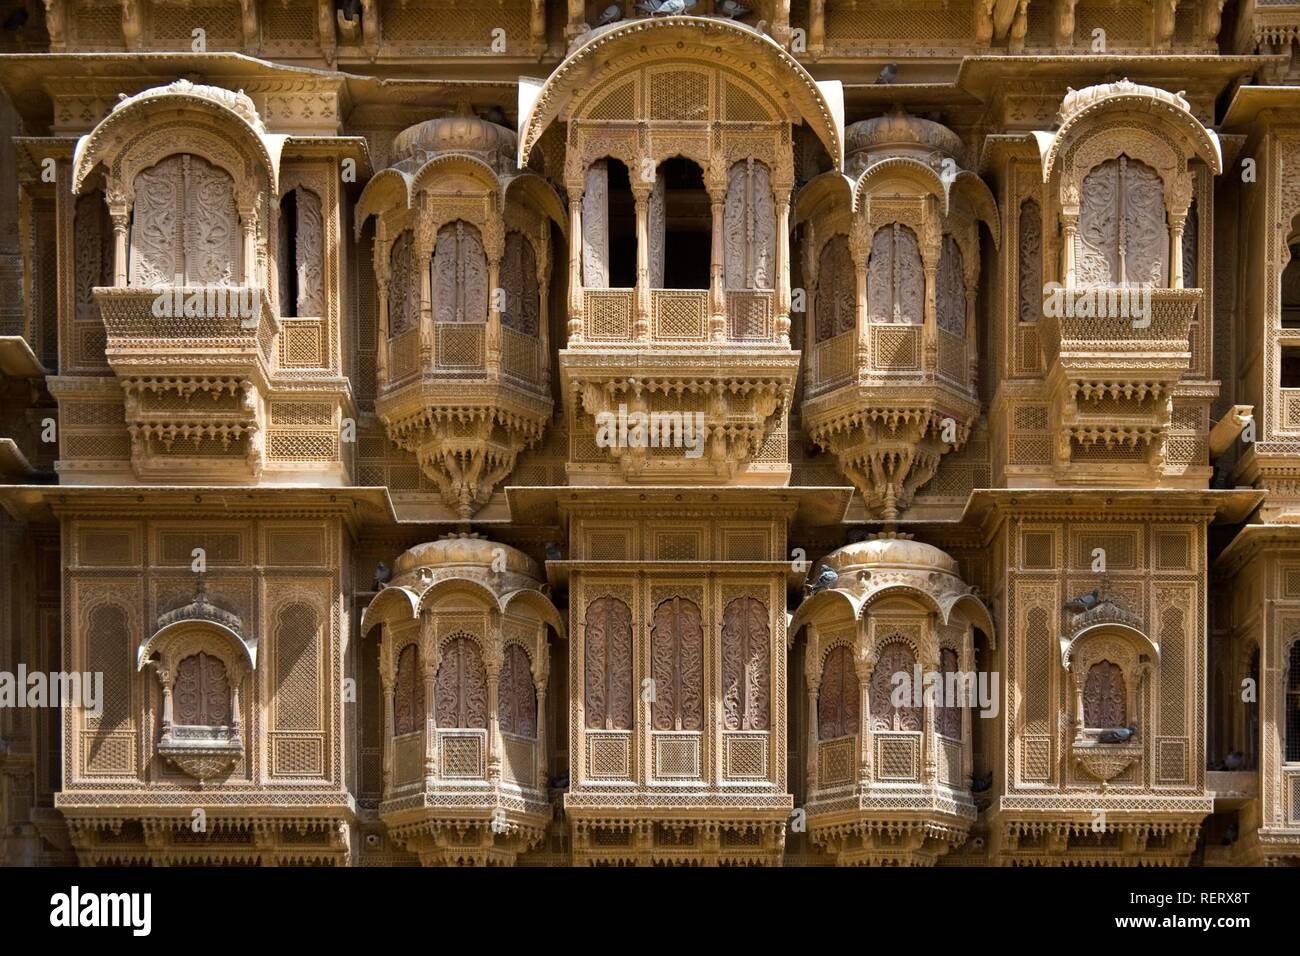 Clerestory windows and balconies of the Patwon or Patwa ki Haveli Palace, Jaisalmer, Thar Desert, Rajasthan, India, South Asia Stock Photo